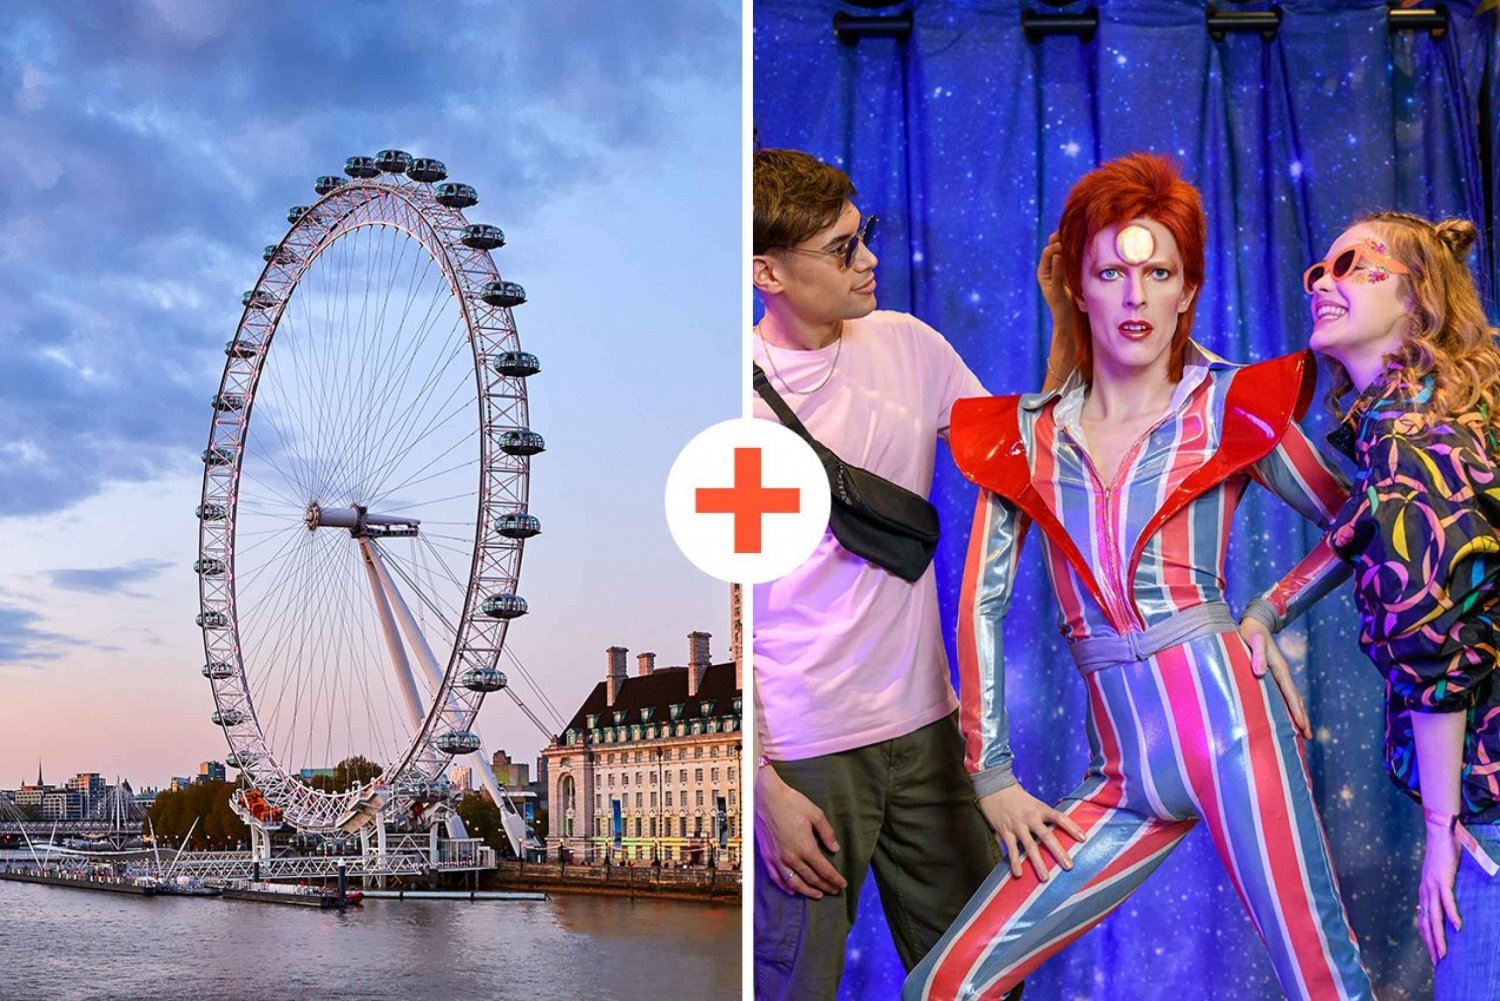 Londra: Biglietto cumulativo London Eye e Madame Tussauds